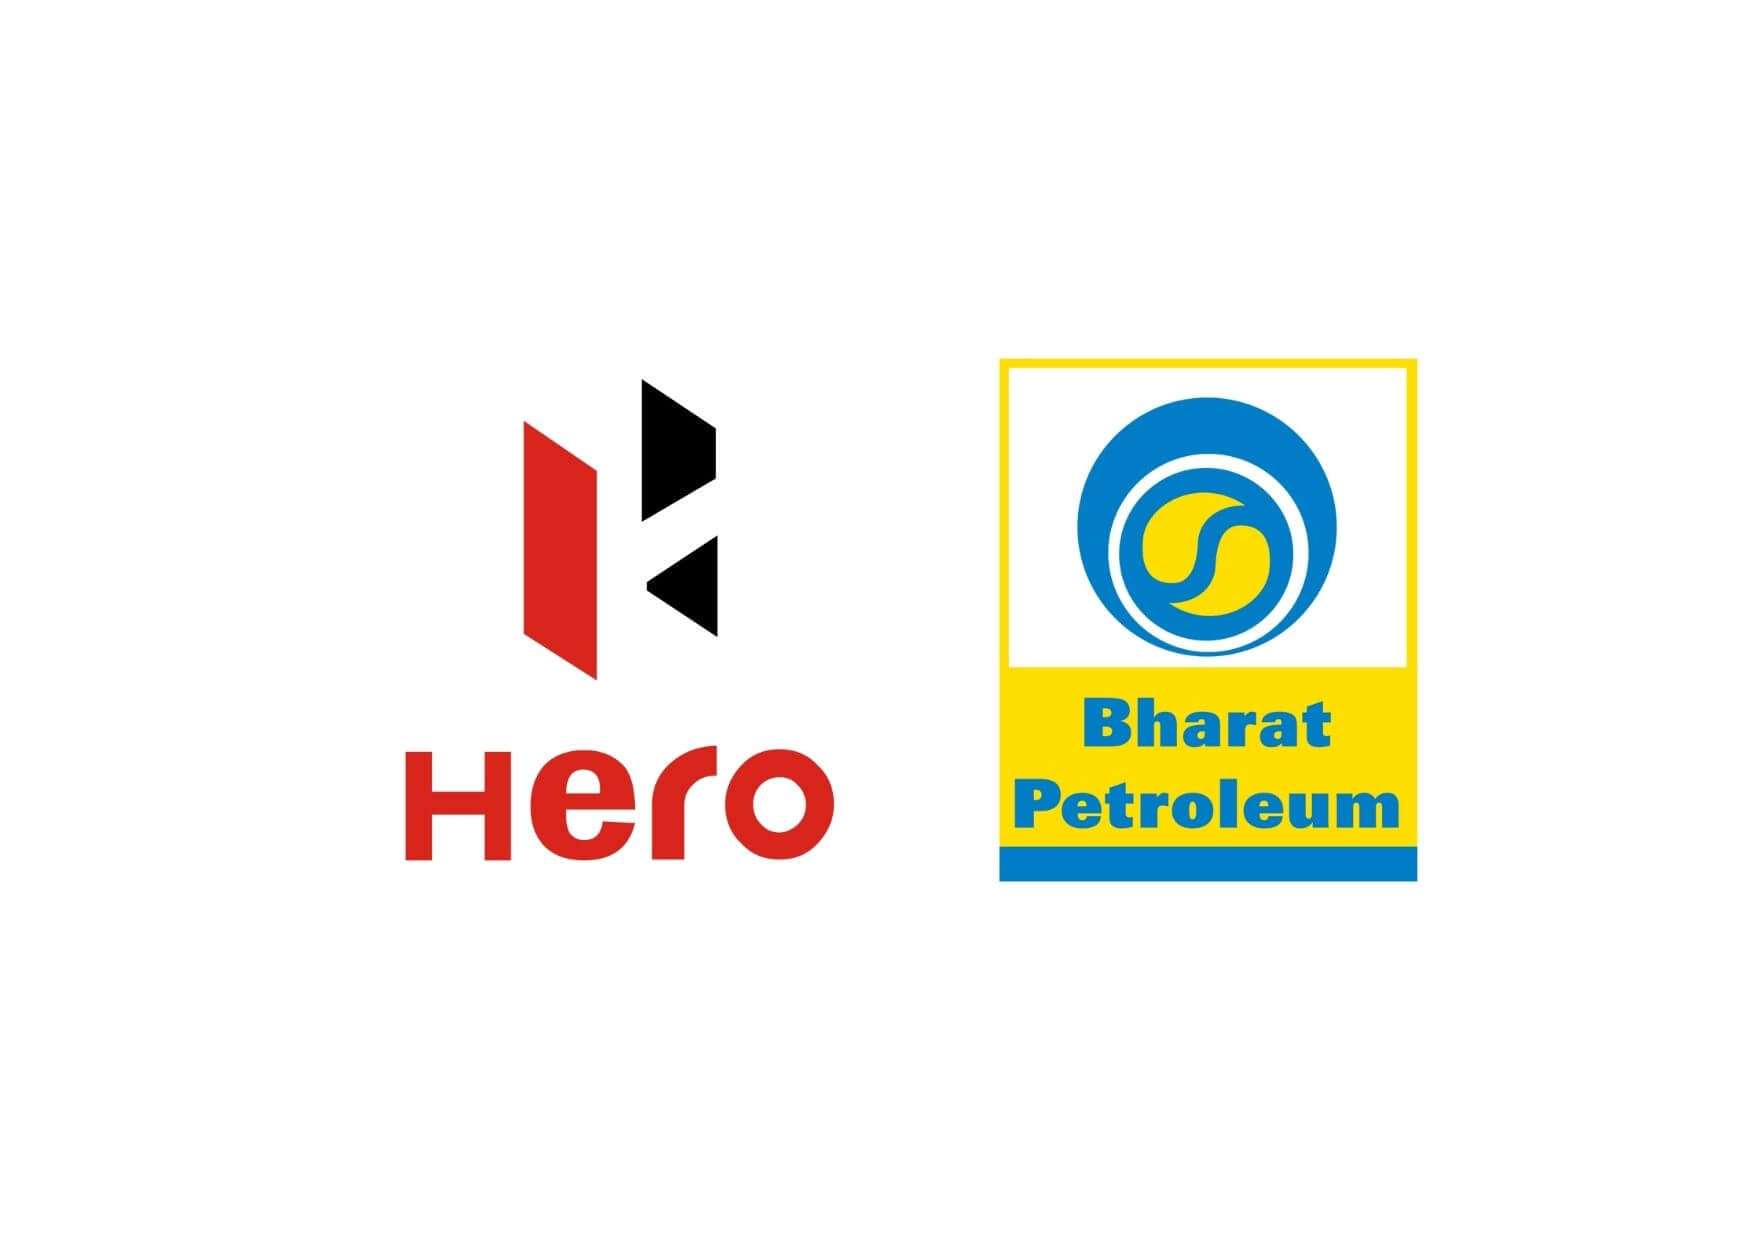 Hero MotoCorp Bharat petroleum logo